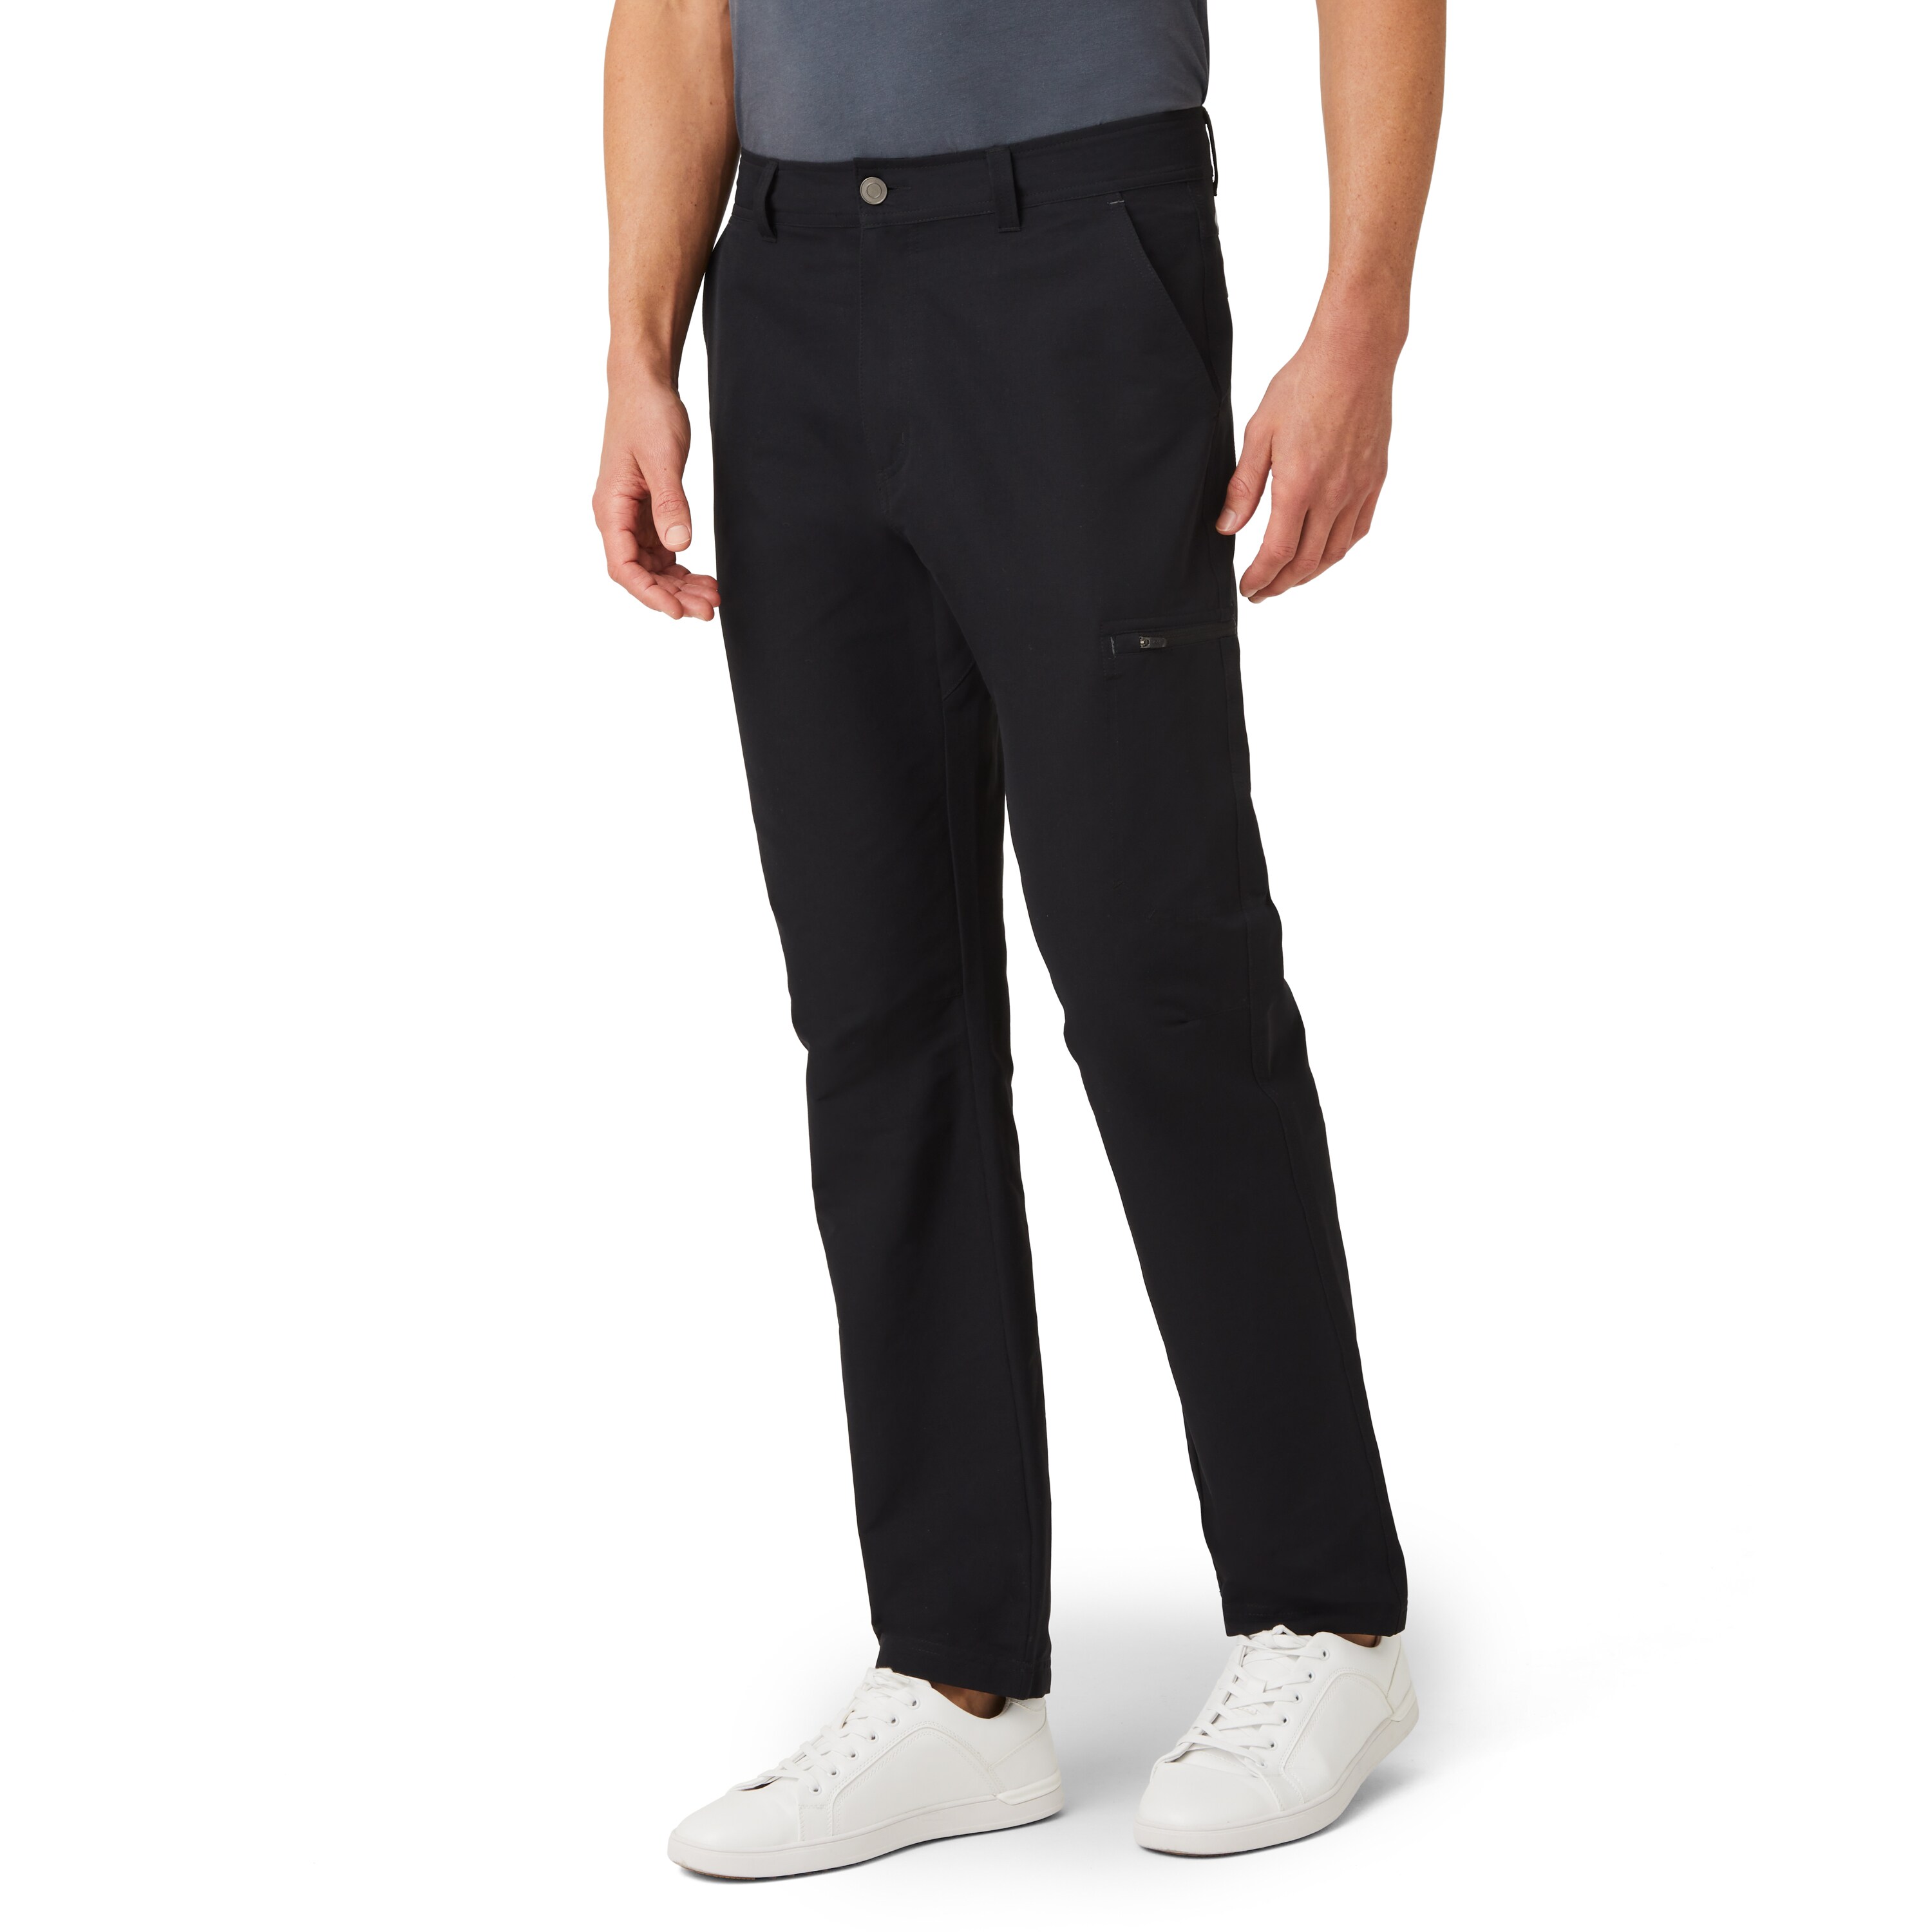 Khaki pants Work Pants at Lowes.com